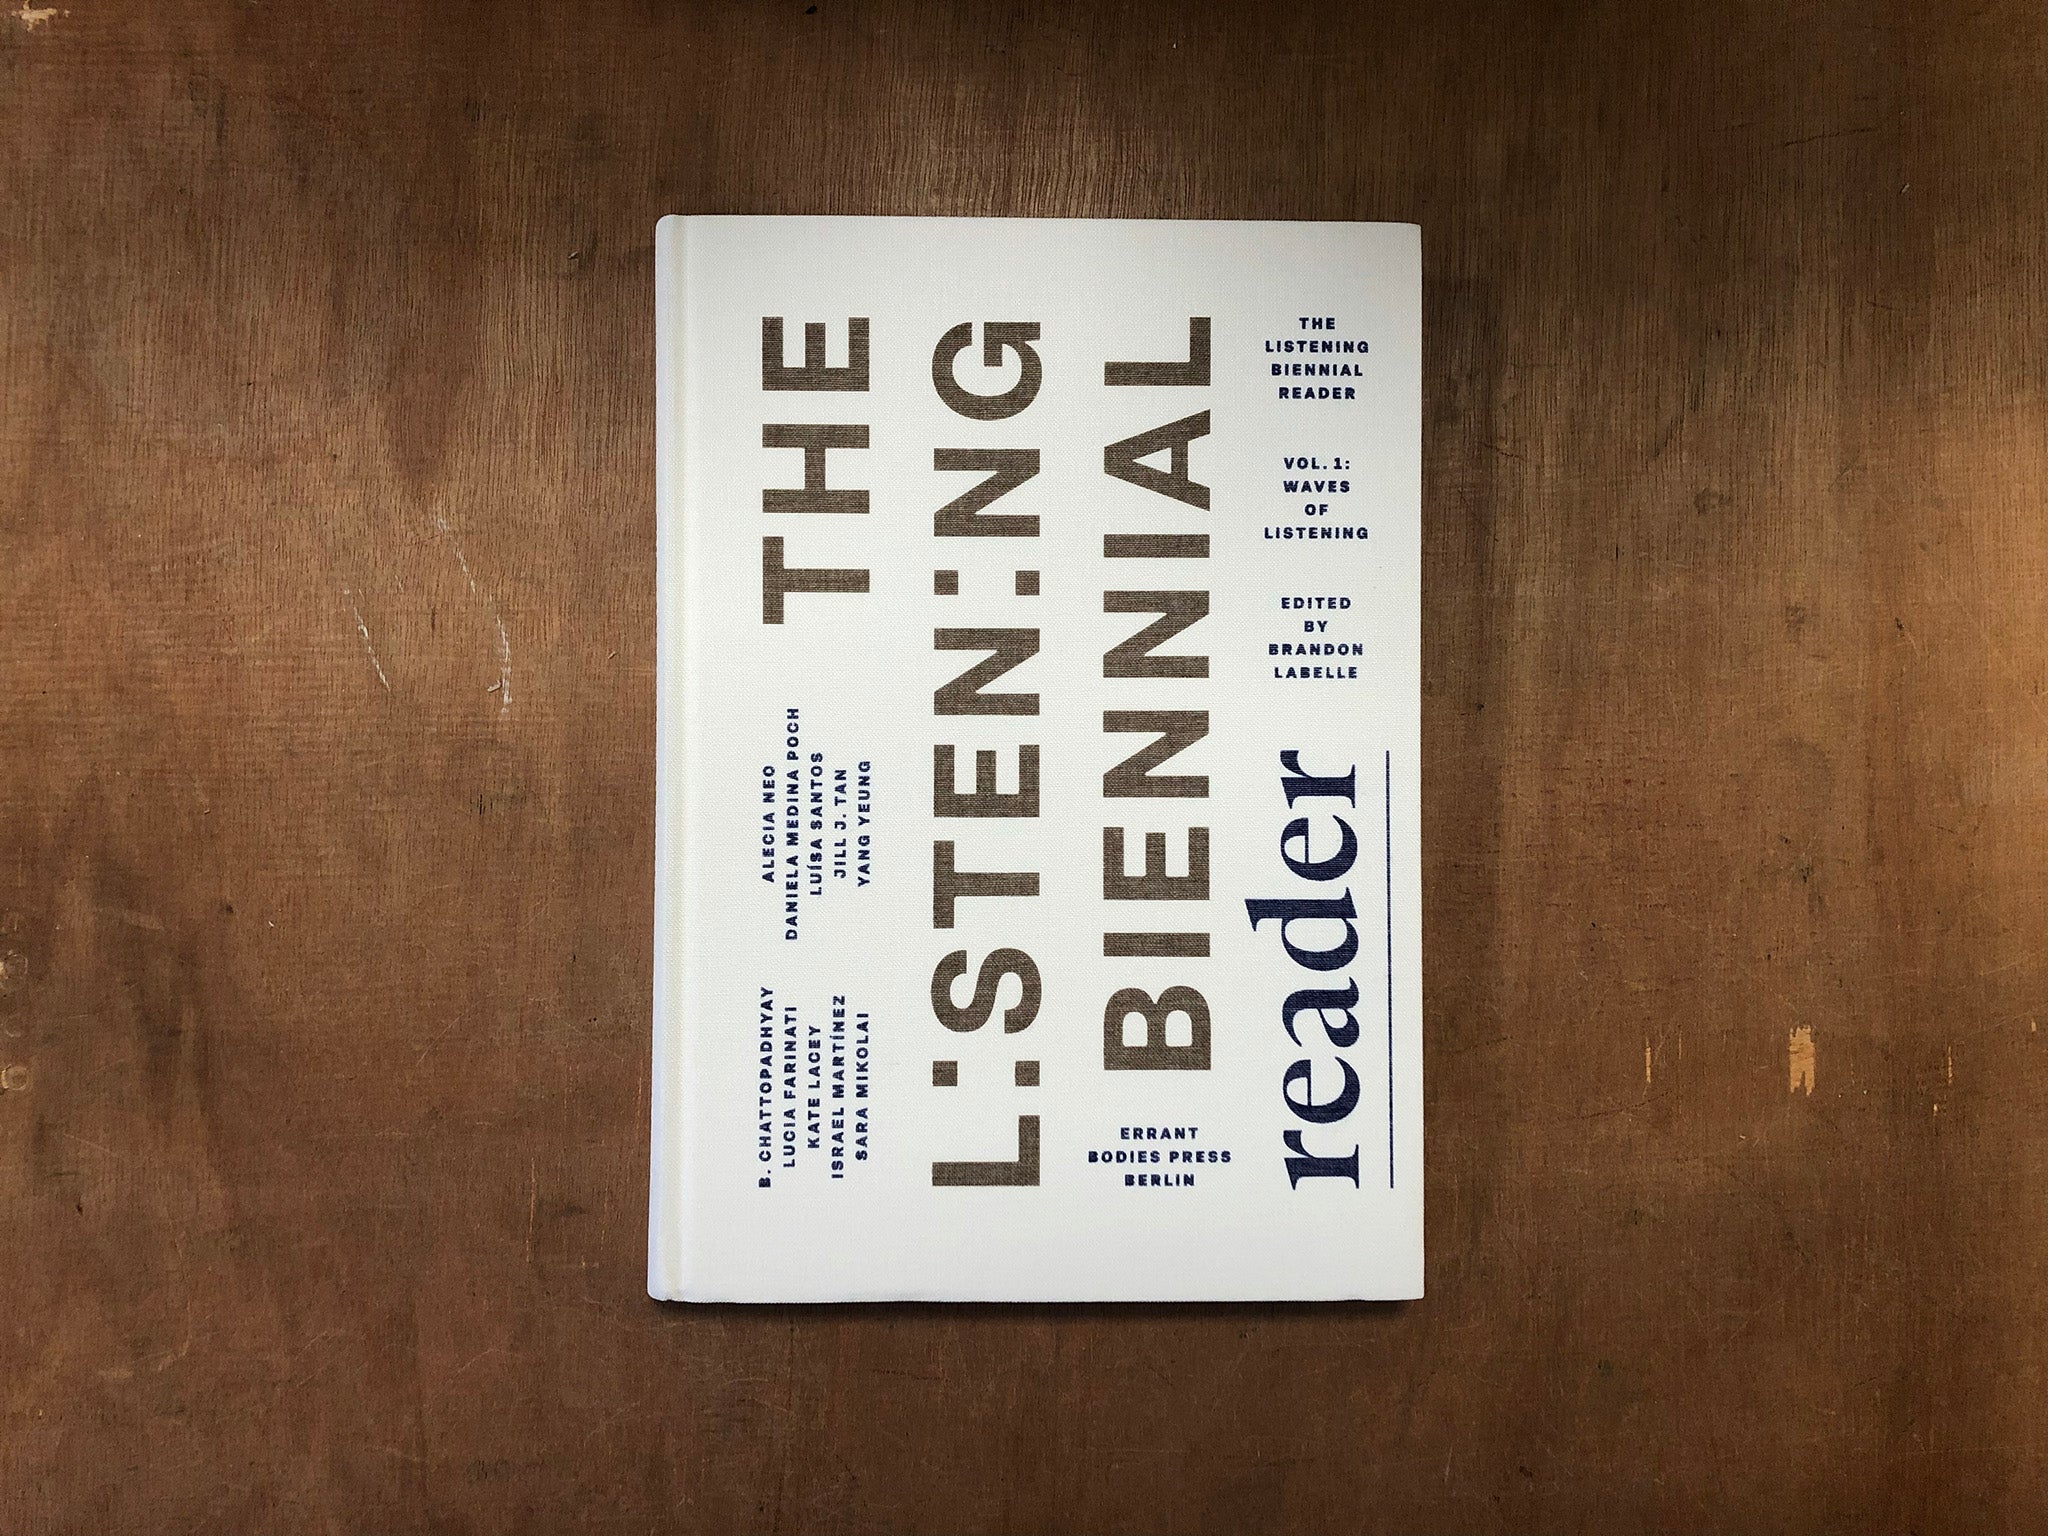 THE LISTENING BIENNIAL READER – VOL. 1: WAVES OF LISTENING Edited by Brandon LaBelle